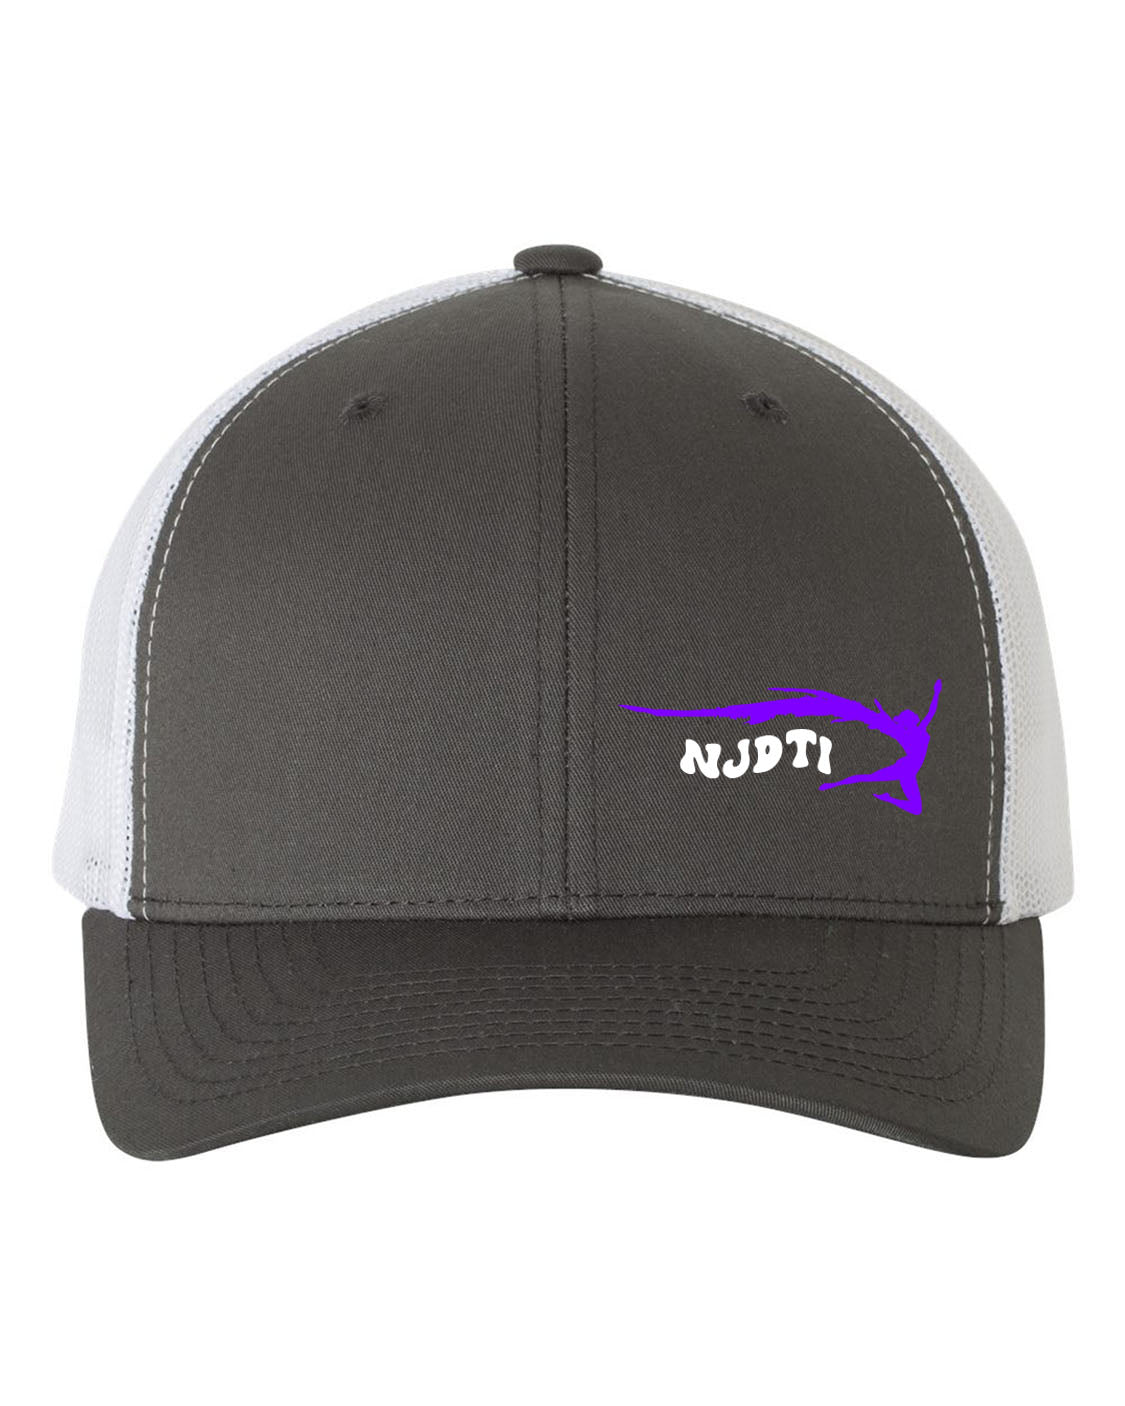 NJ Dance Design 12 Trucker Hat